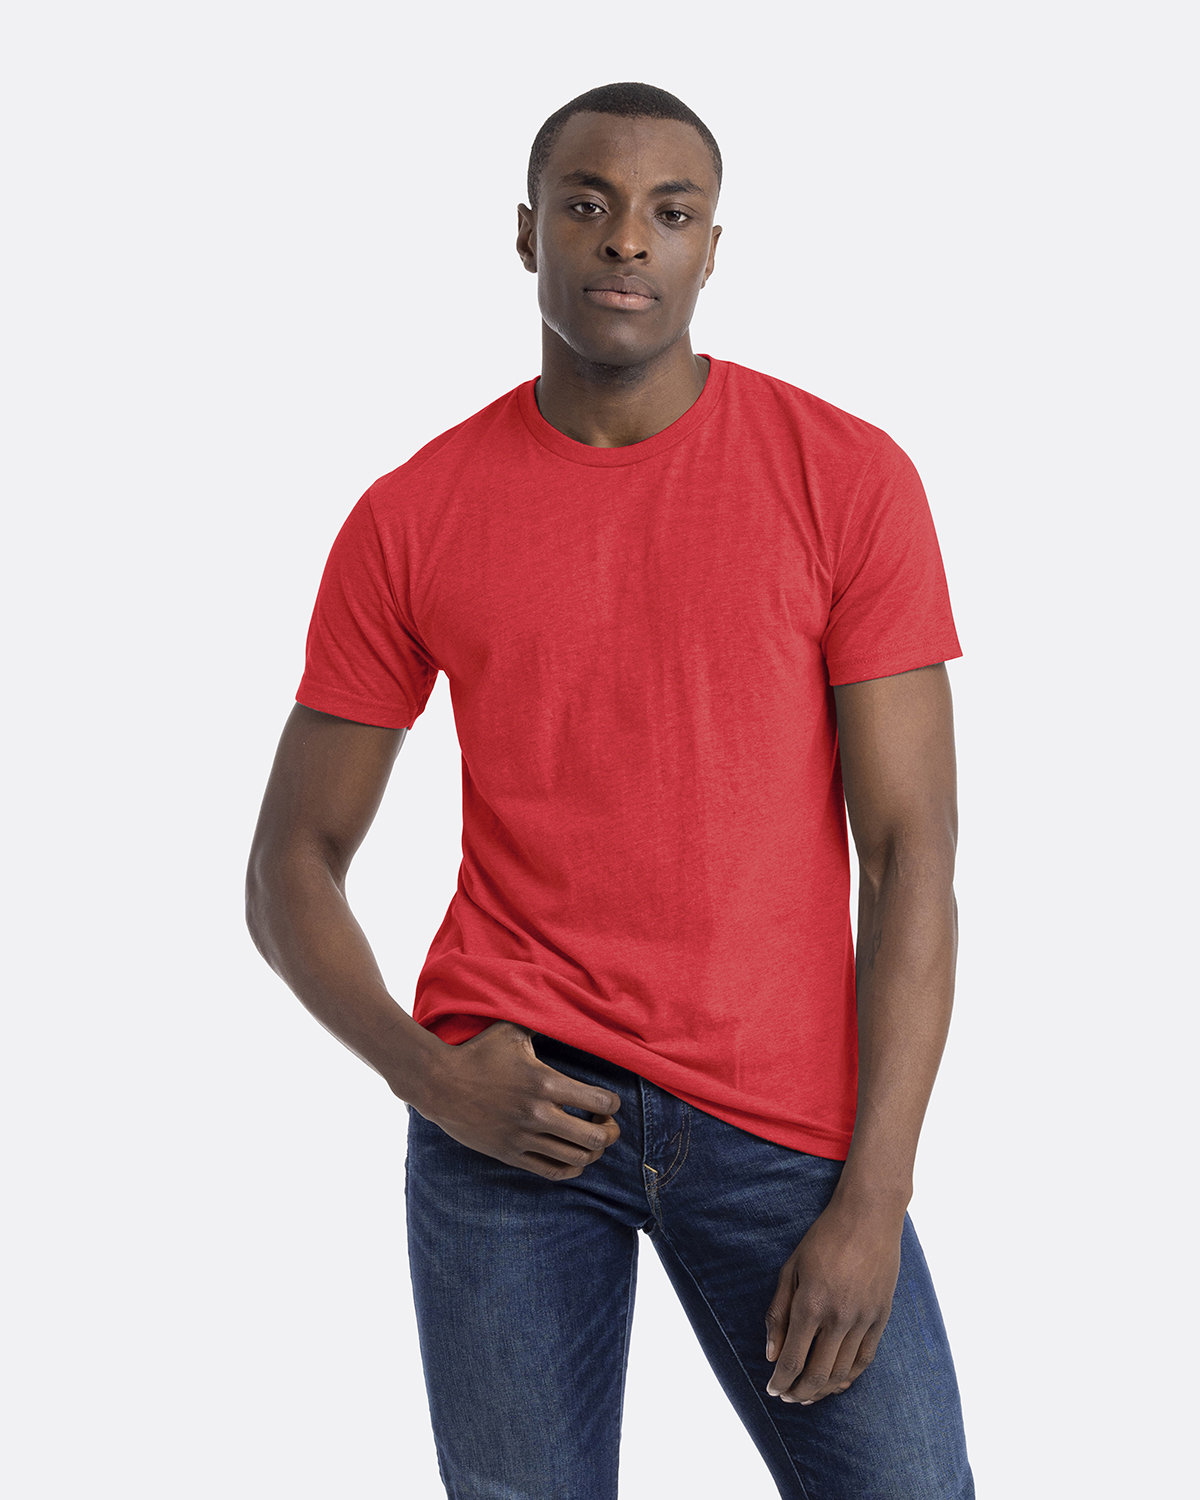 Next Level Unisex CVC Crewneck T-Shirt RED 